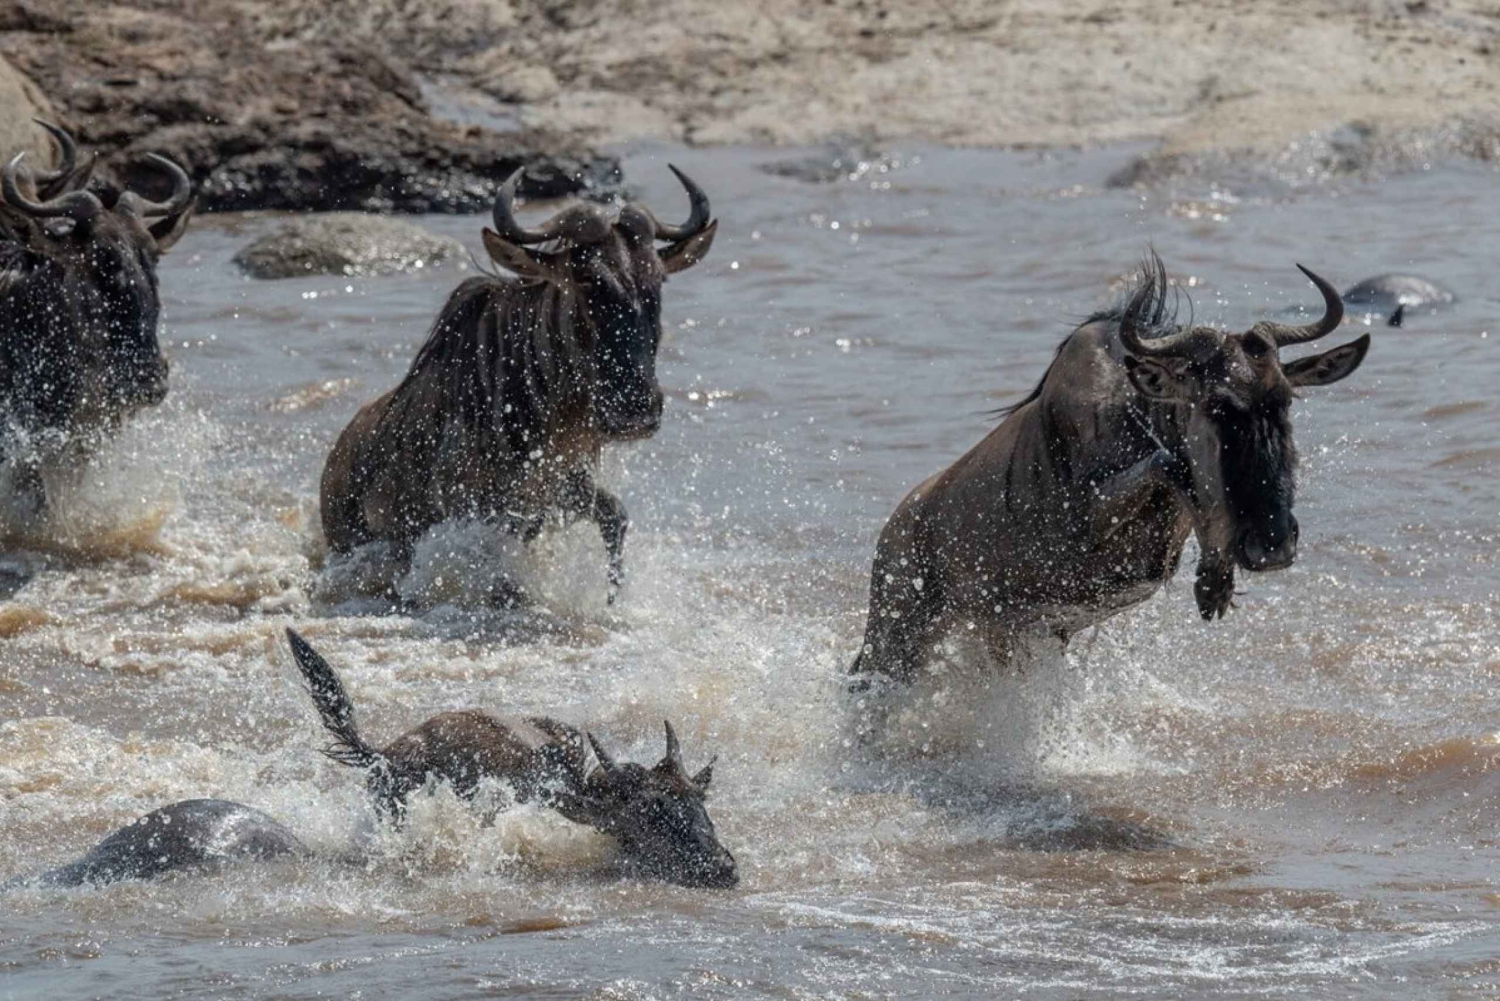 Indepth tour of wildbeest migration Serengeti and Ngorongoro